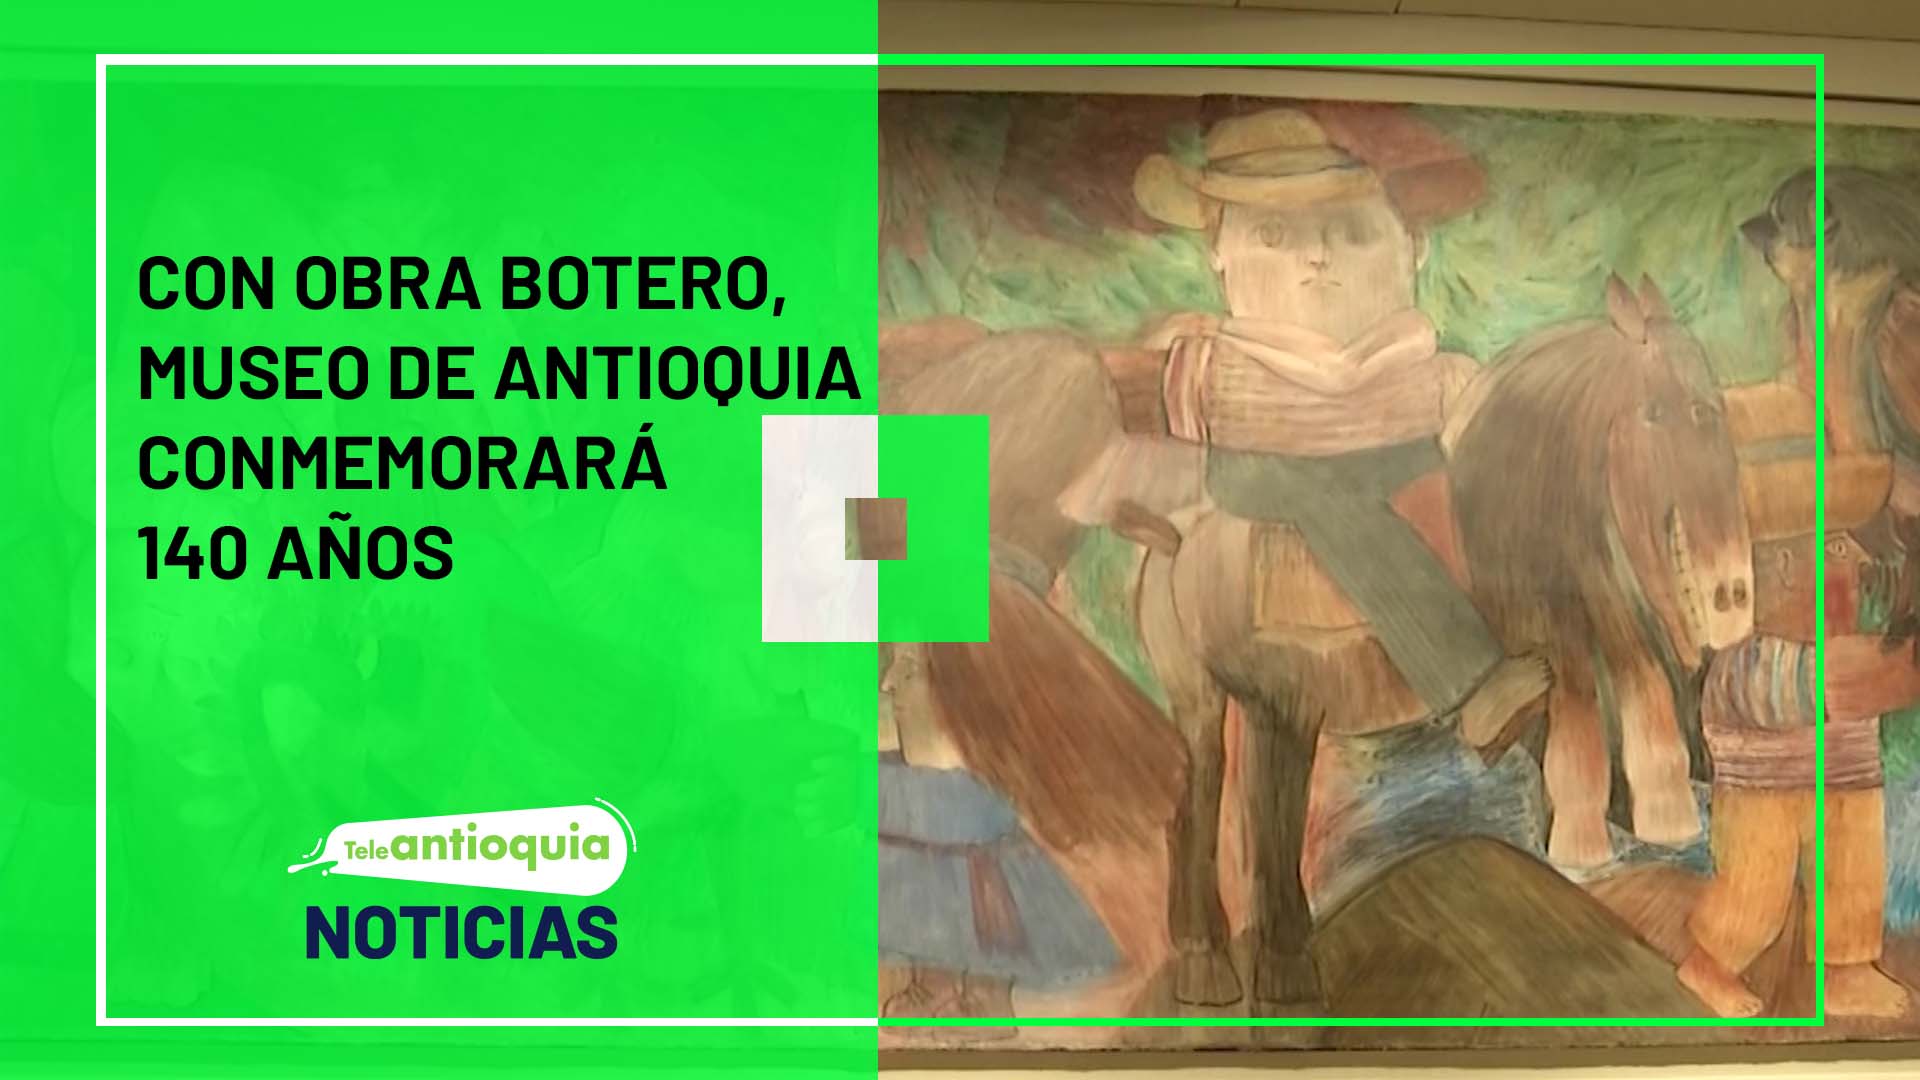 Con obra Botero, Museo de Antioquia conmemorará 140 años